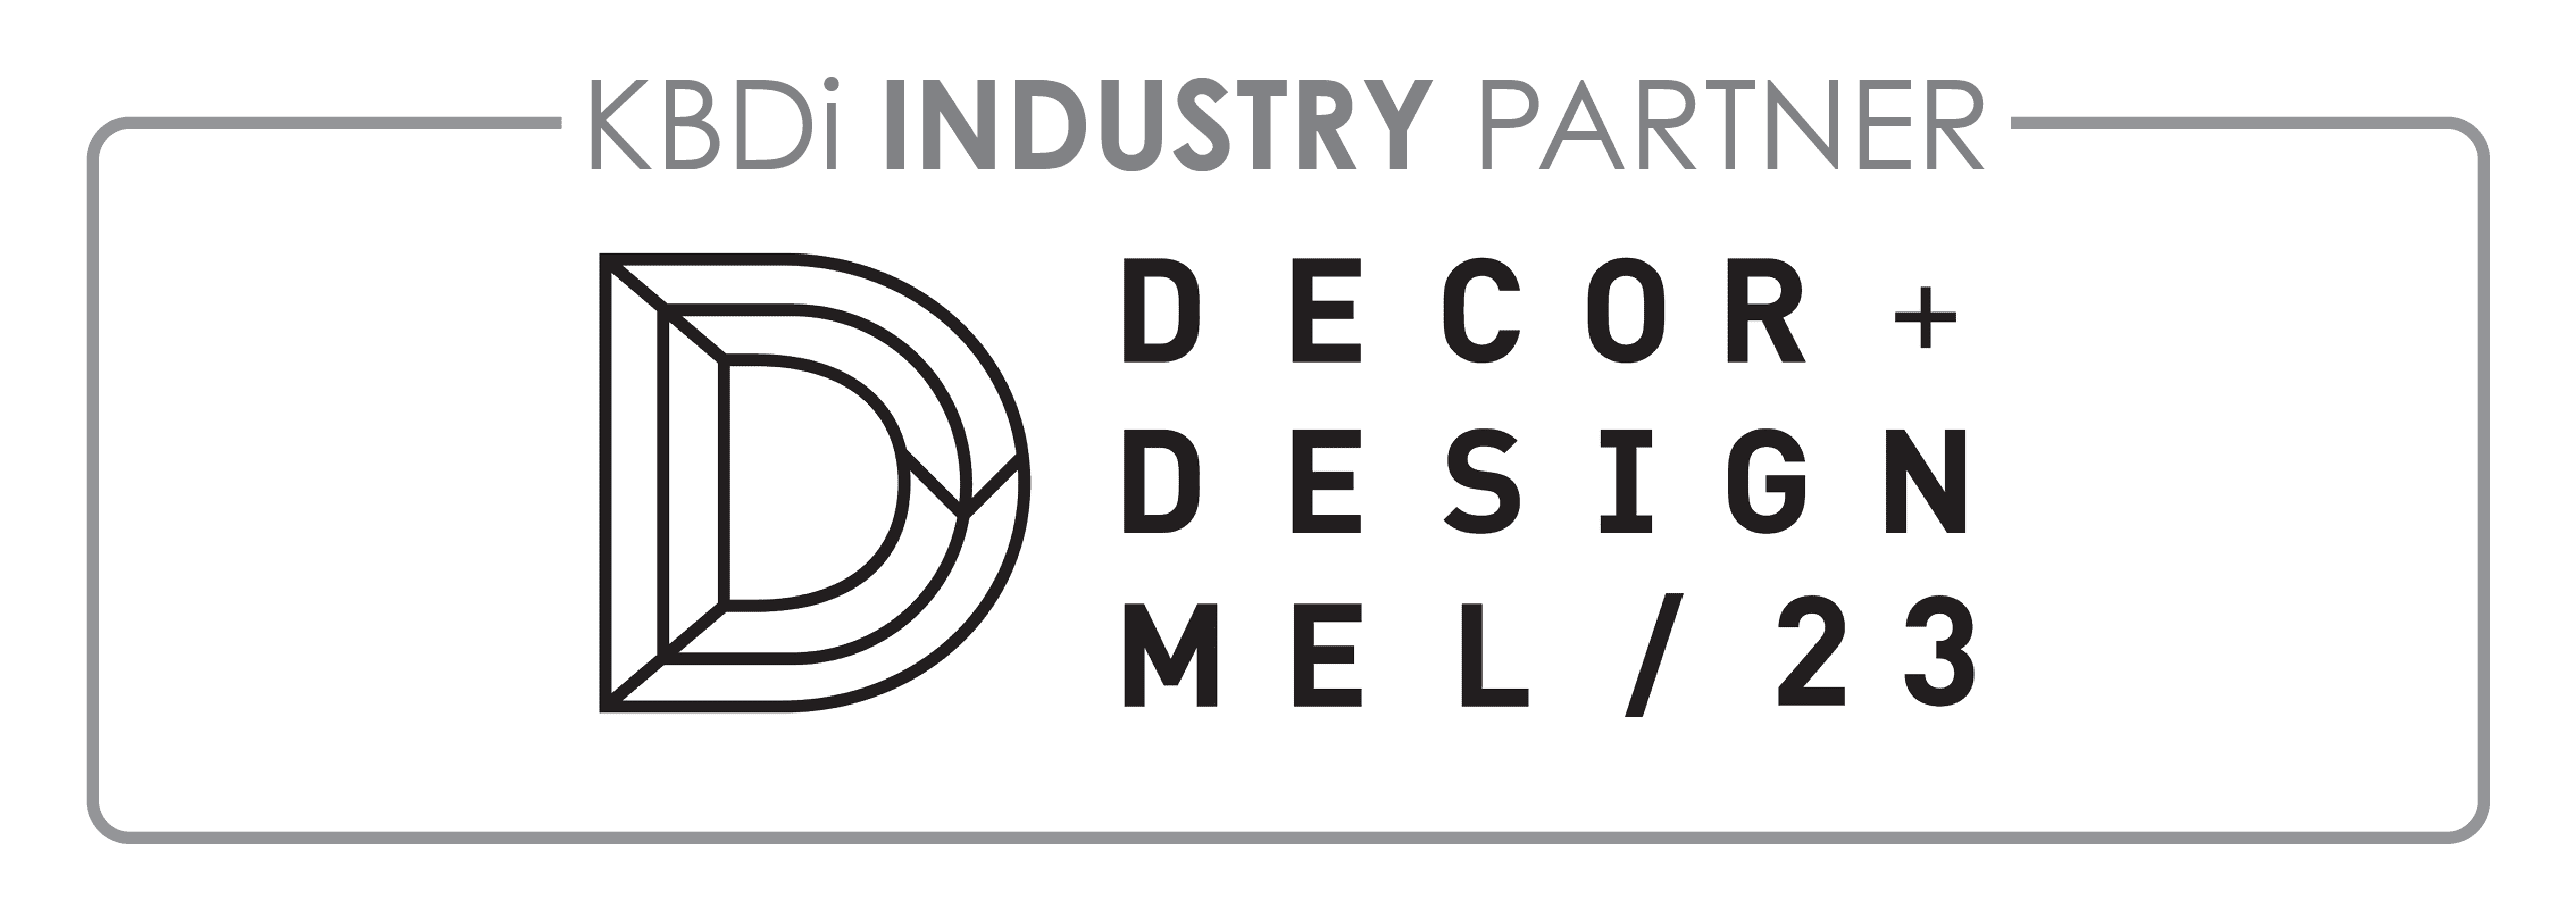 KBDi Industry Partner Decor + Design Show